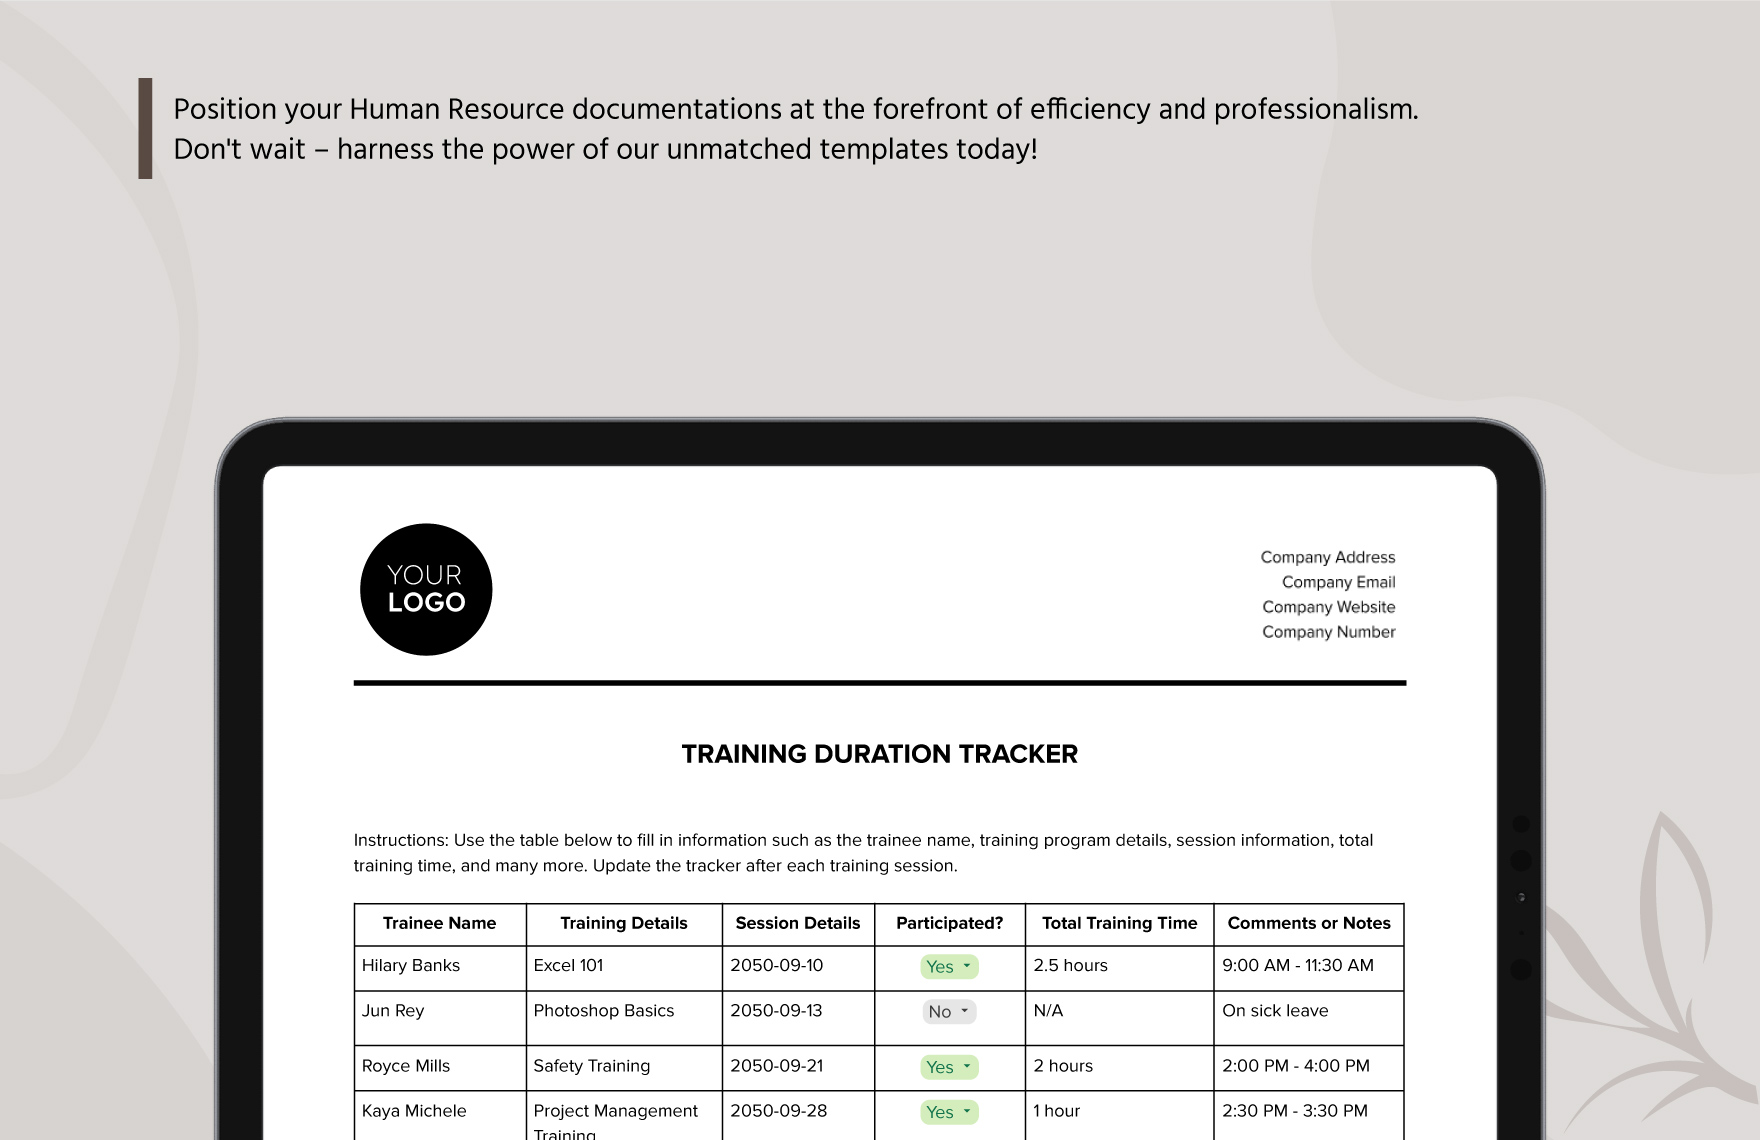 Training Duration Tracker HR Template